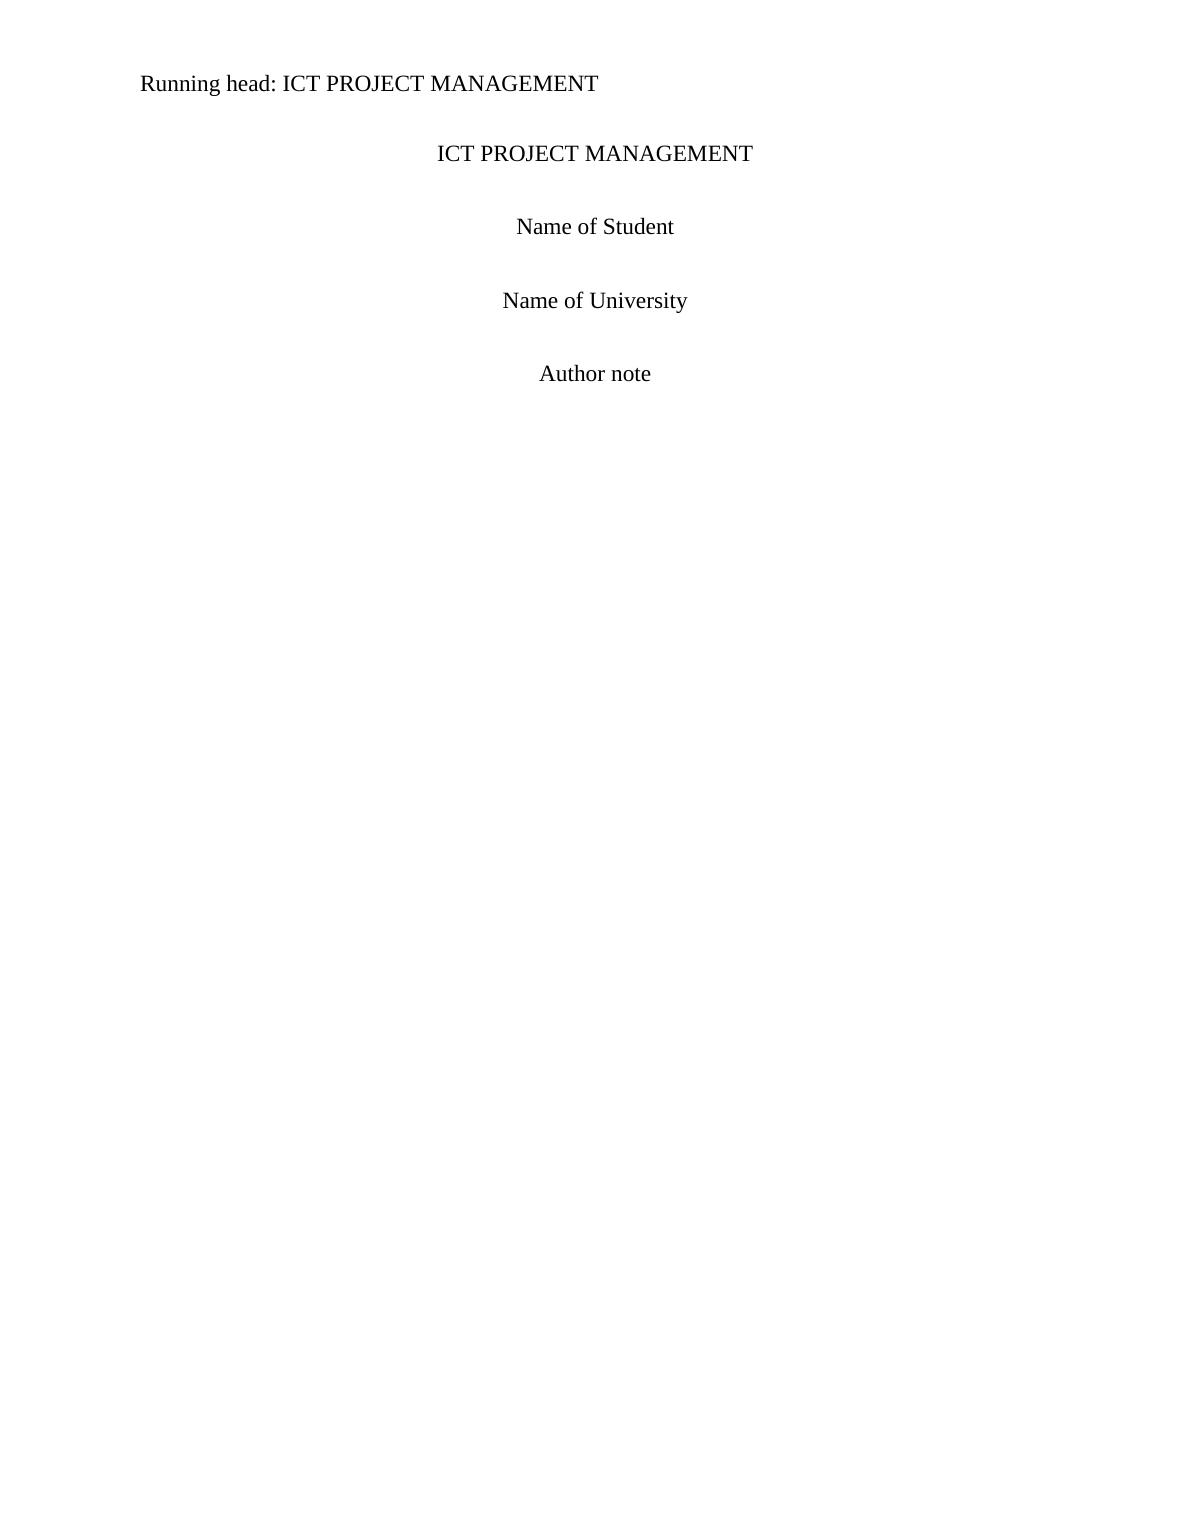 ICT project management Assignment PDF_1